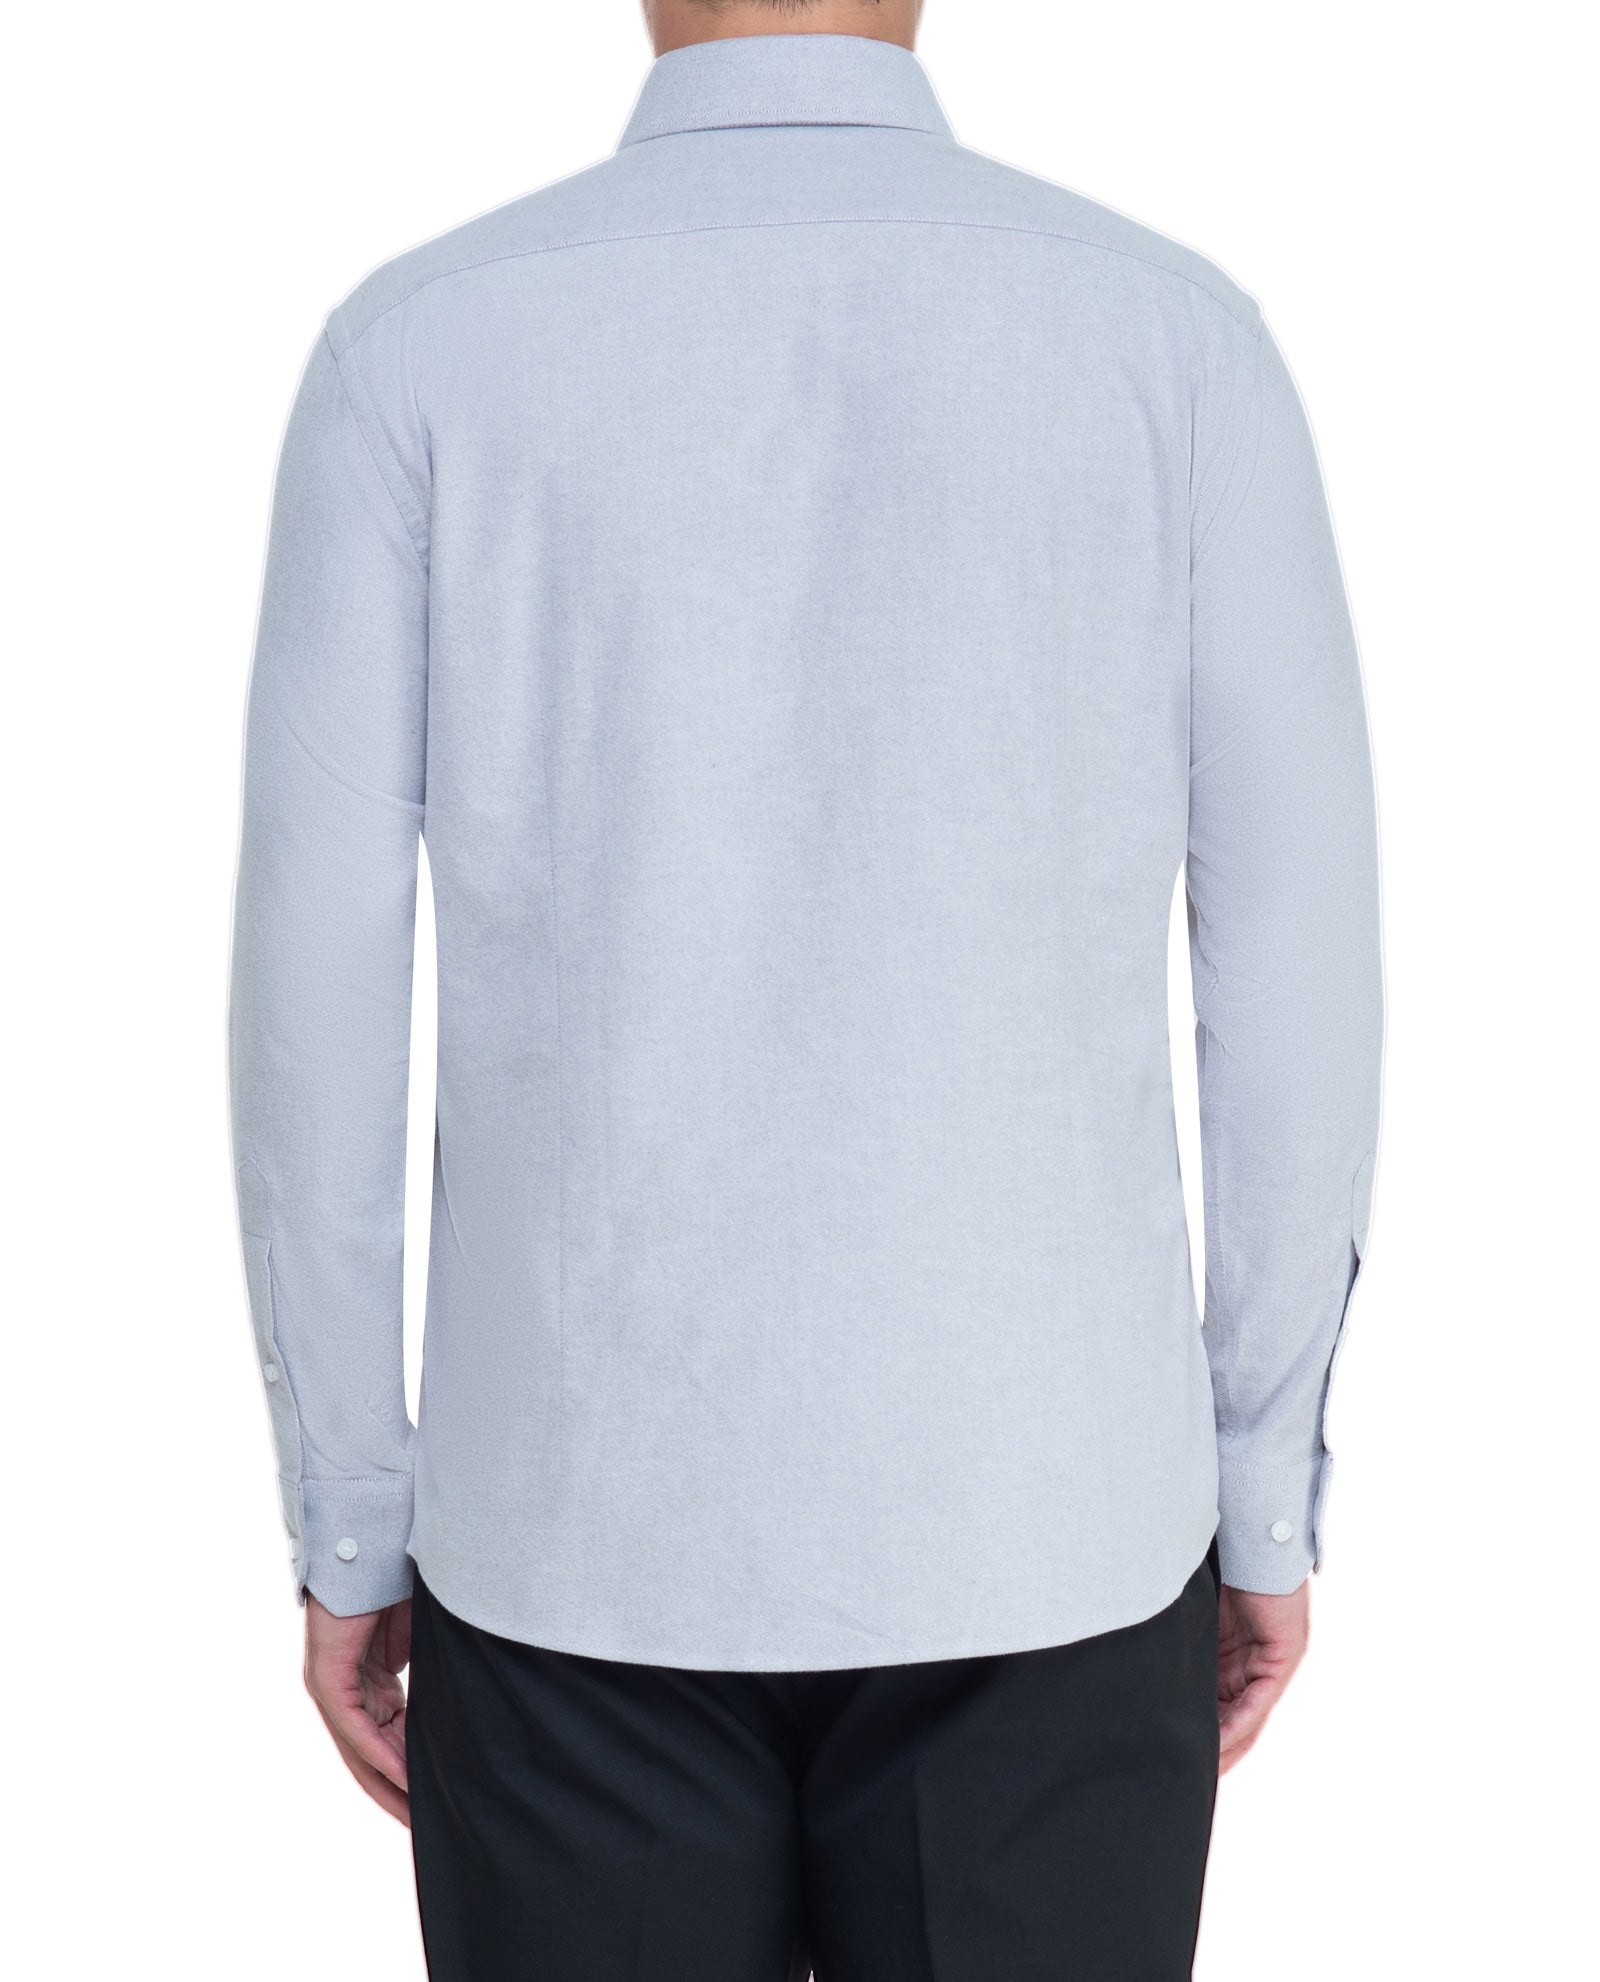 Men's Grey Flannel Sport Shirt